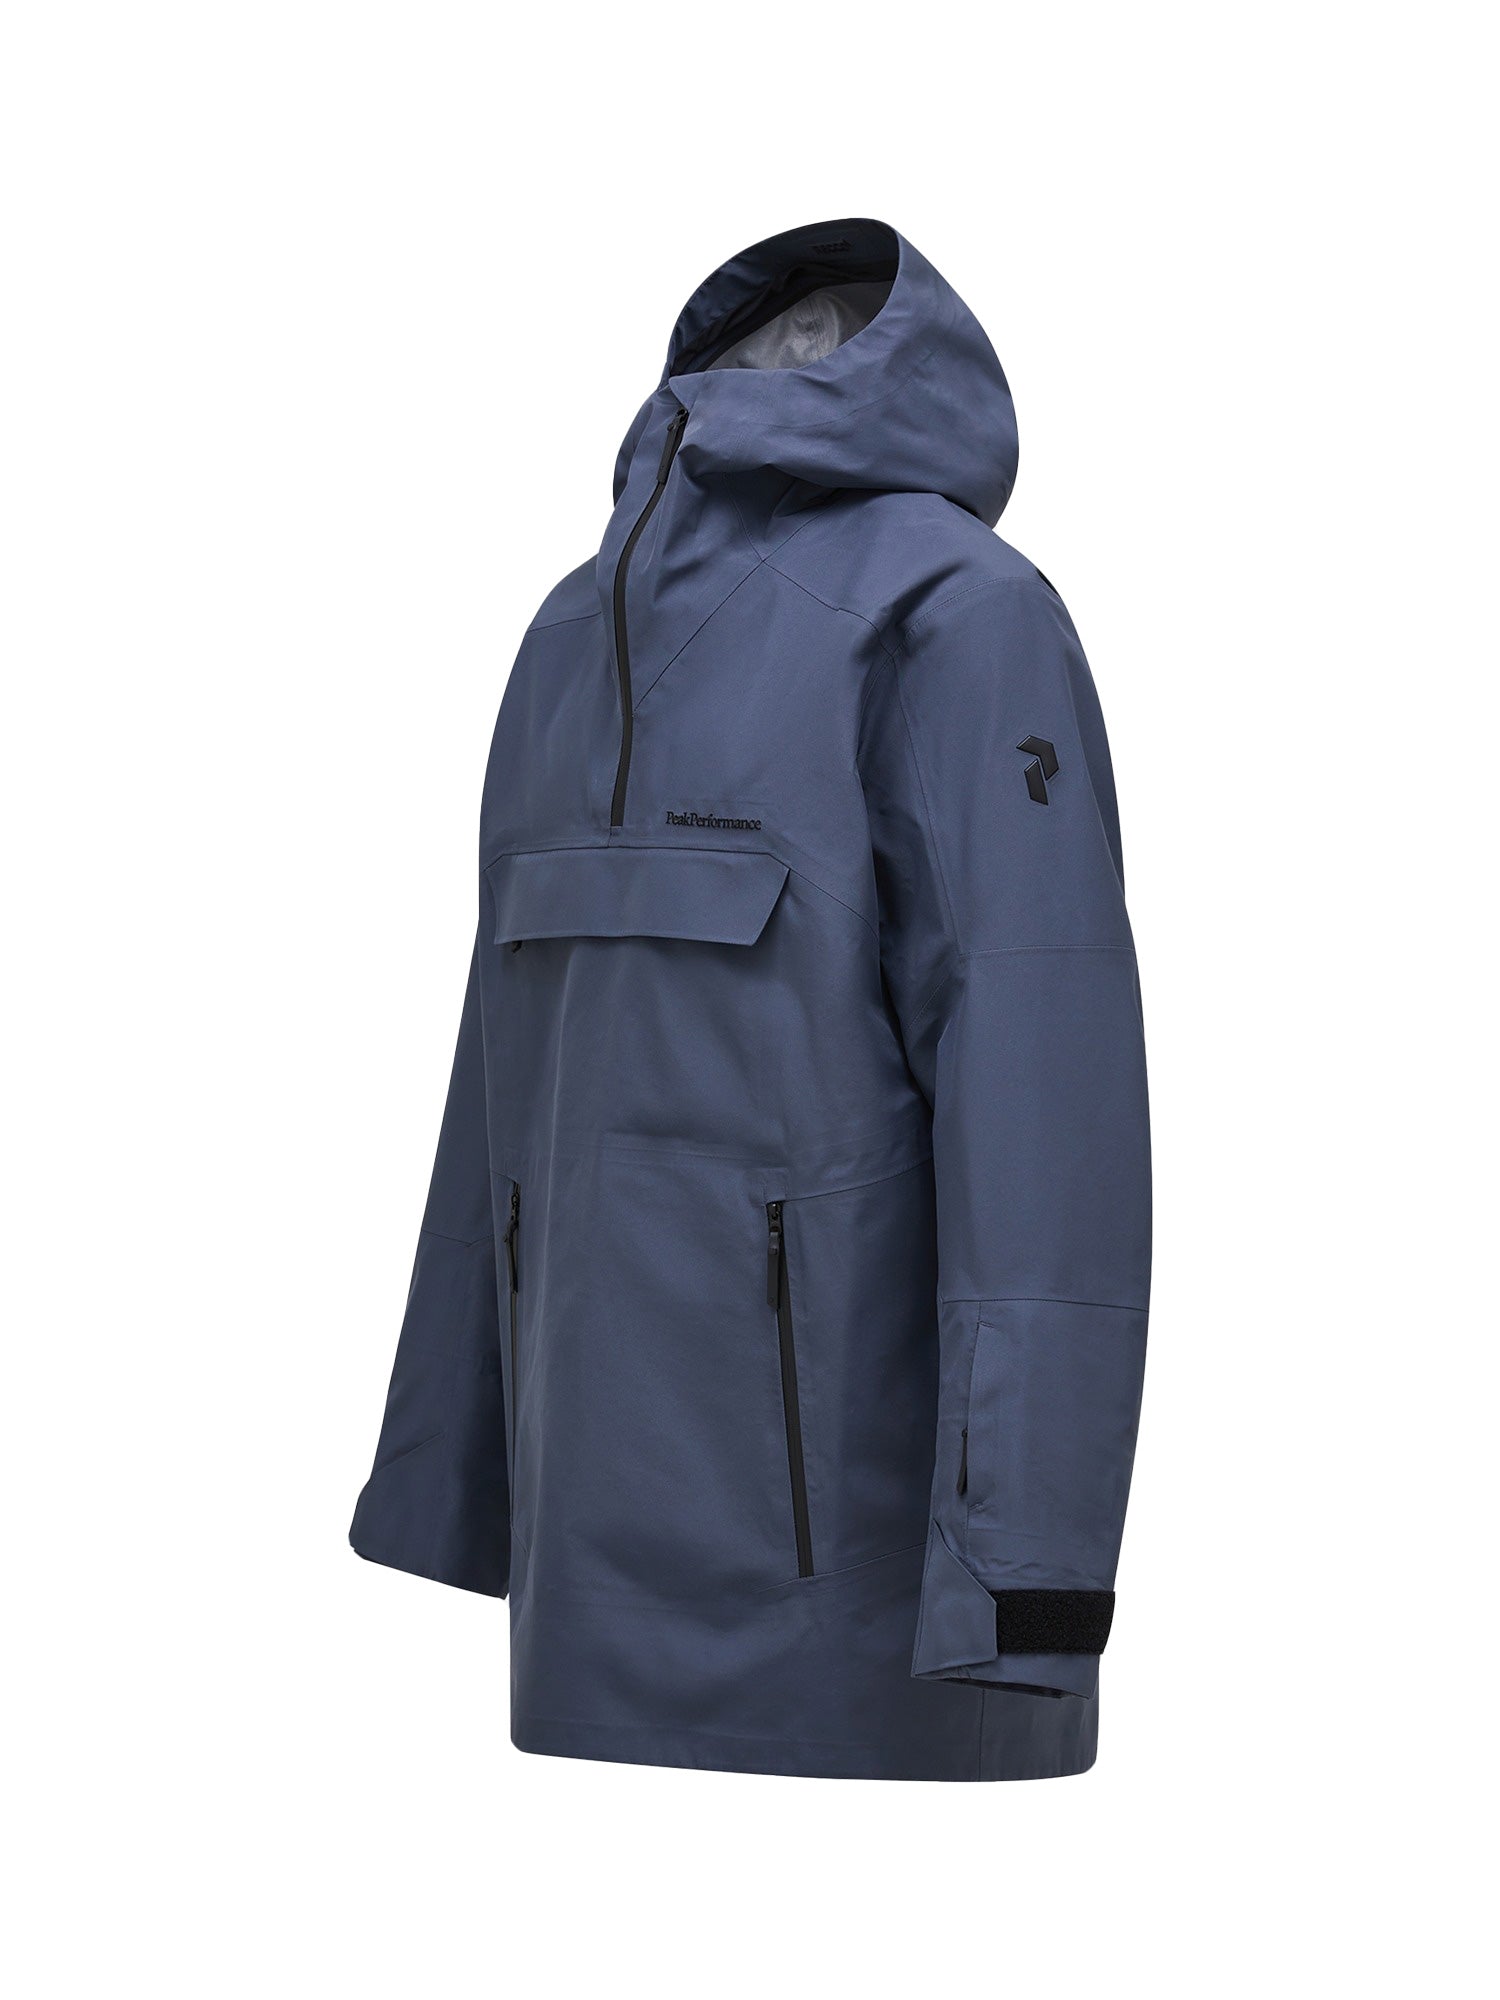 bloomouterwear anorak jacket Lサイズアノラックジャケット - スキー